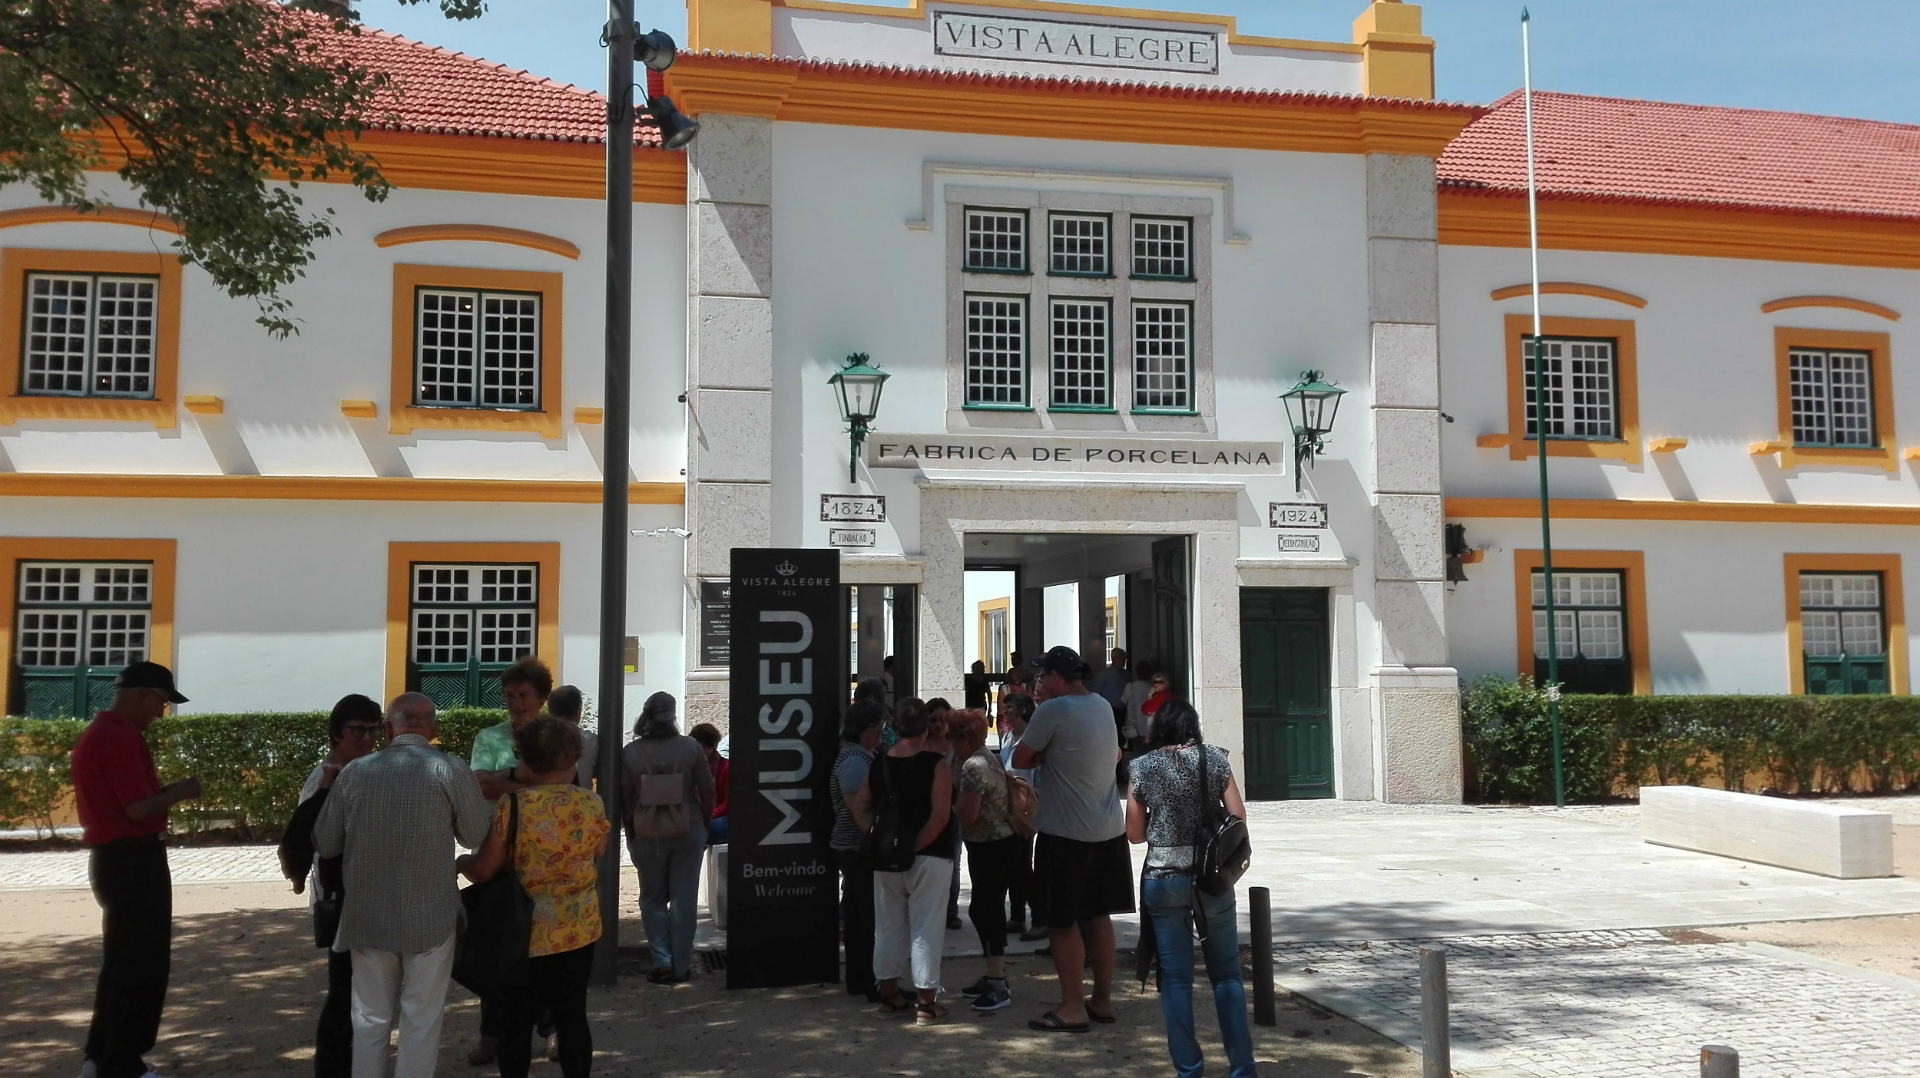 Prestigious Museums: Vista Alegre Museum museums in portugal Museums in Portugal: See a Selection of Some of the Most Prestigious See a Selection of Some of the Most Prestigious Museums in Portugal 3